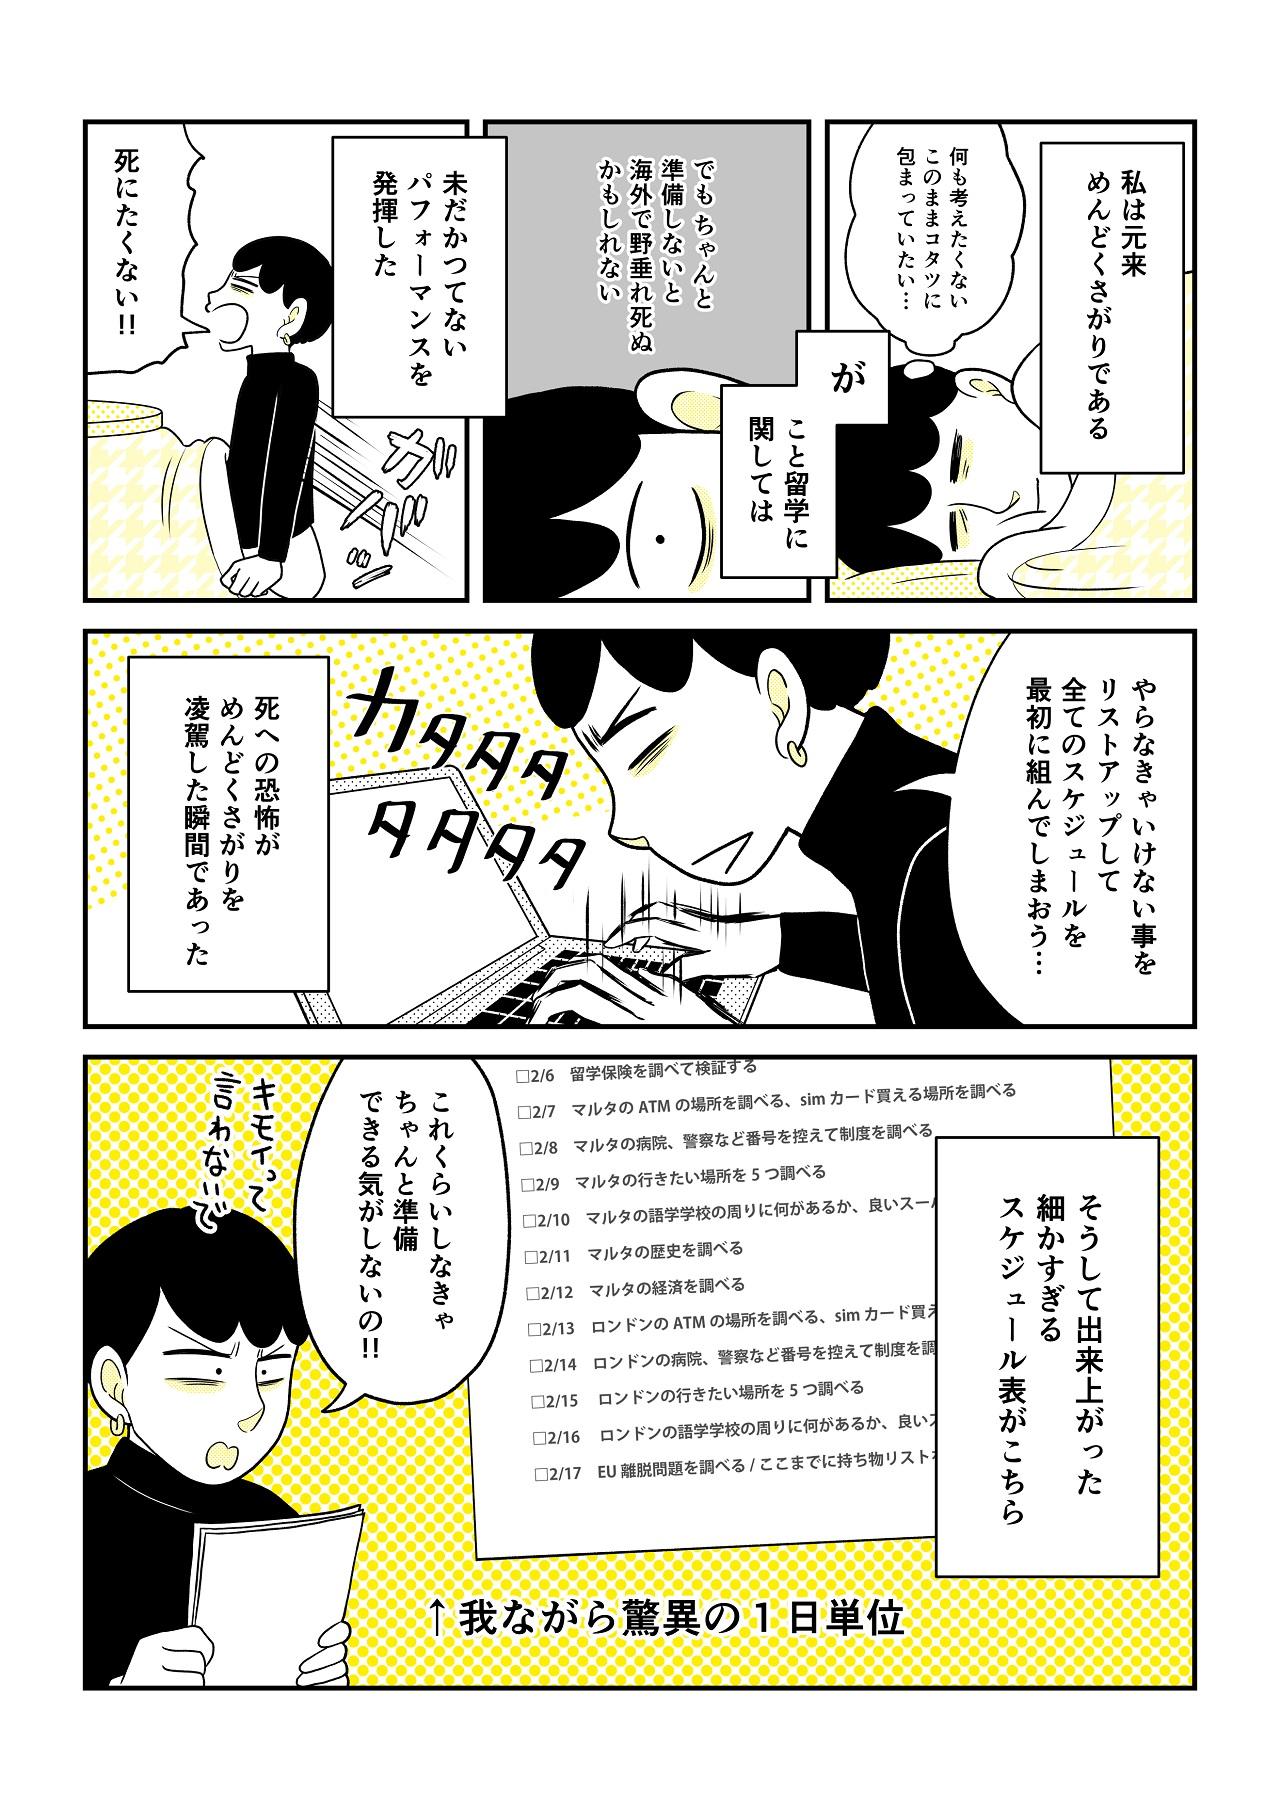 https://www.ryugaku.co.jp/column/images/04_02_1280.jpg